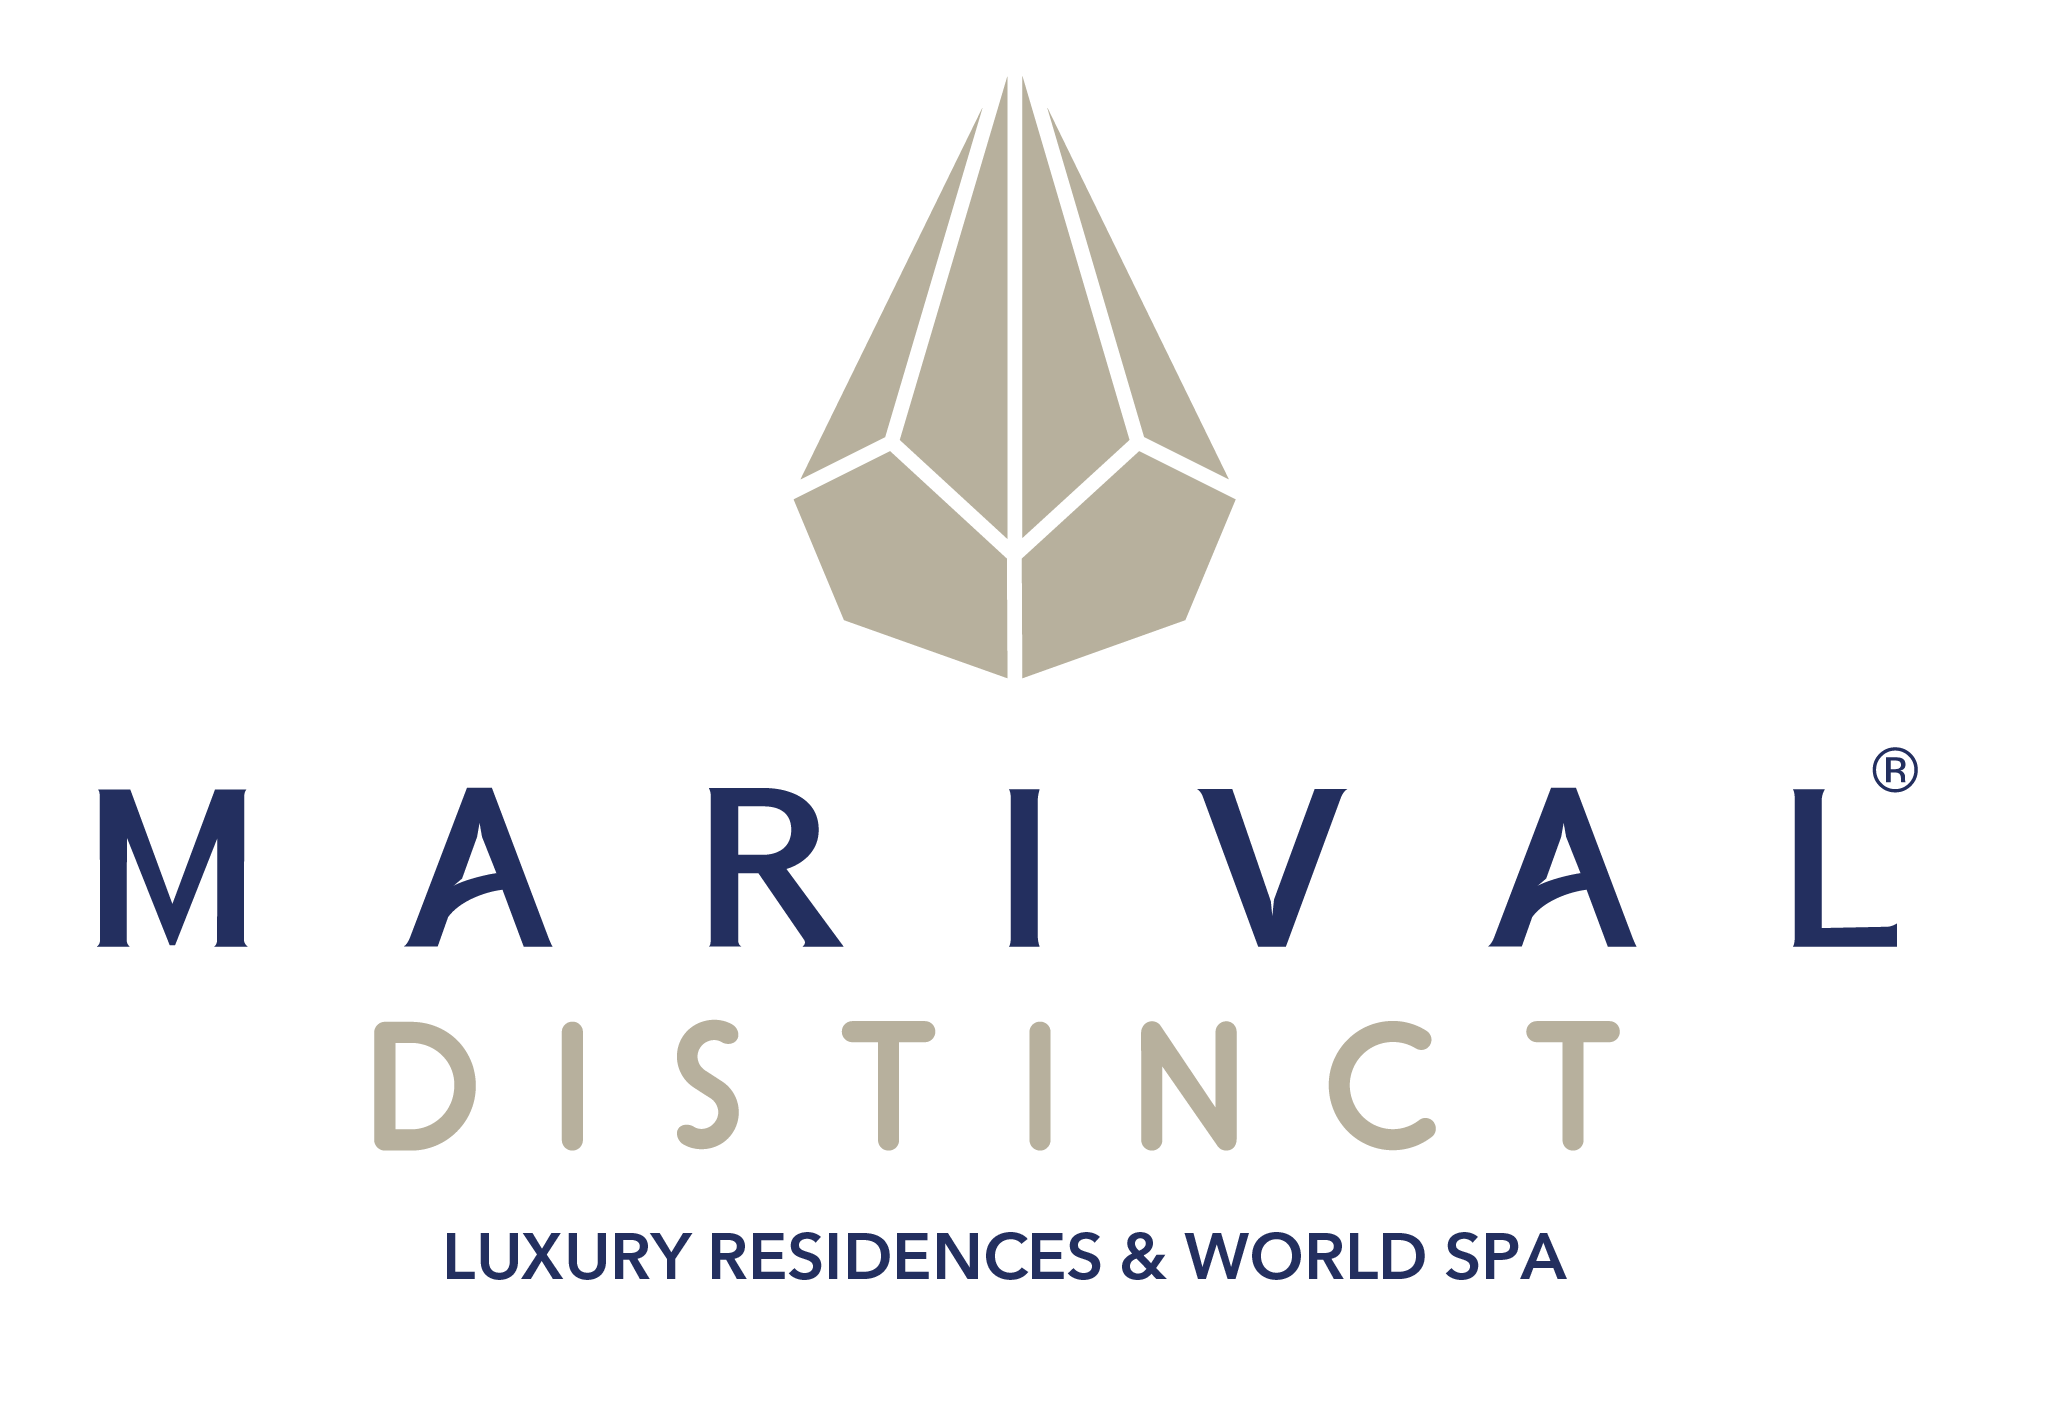 Logo Marival Distinct Luxury Residences & World Spa